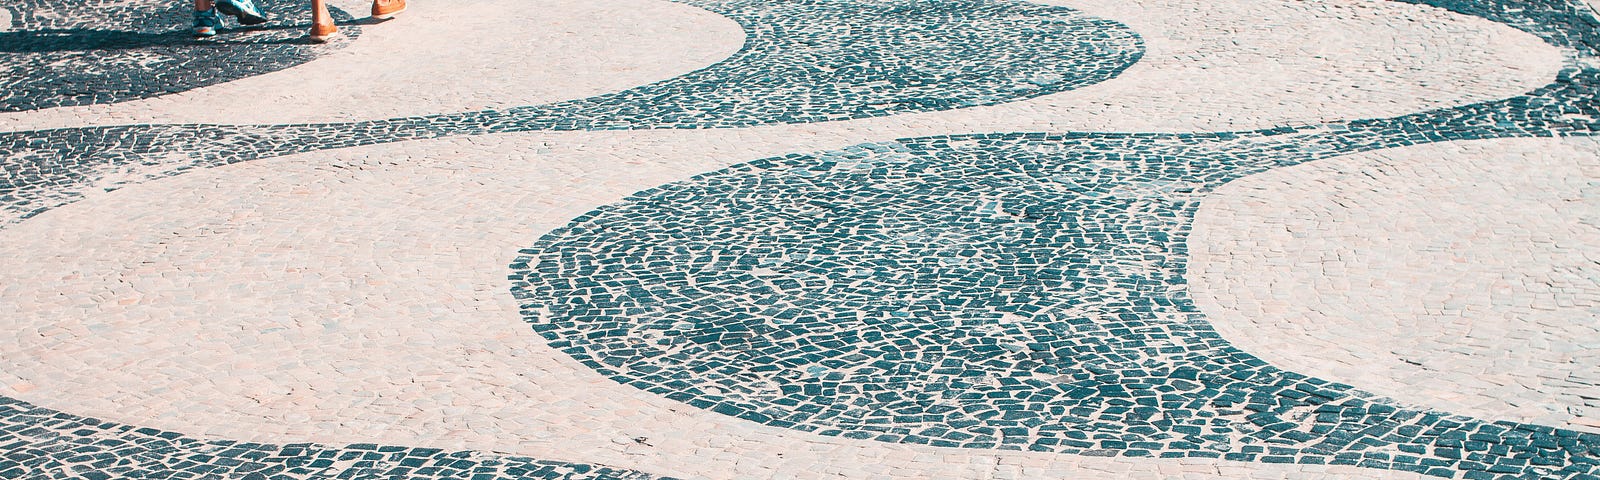 A closeup of the iconic undulating tile boardwalk of Rio’s Copacabana Beach